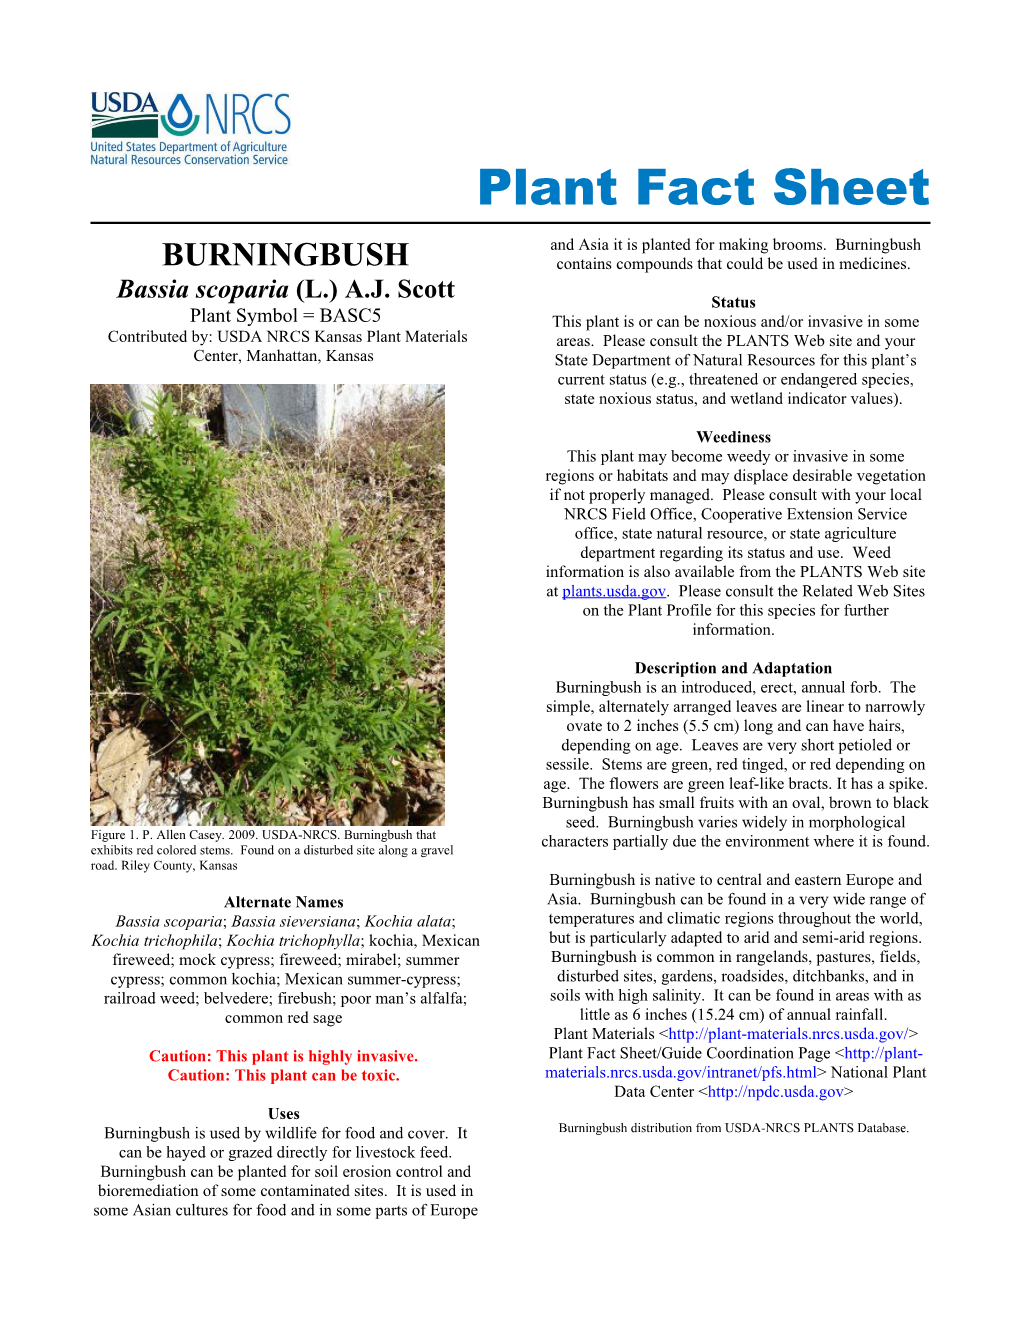 Burningbush (Bassia Scoparia) Plant Fact Sheet